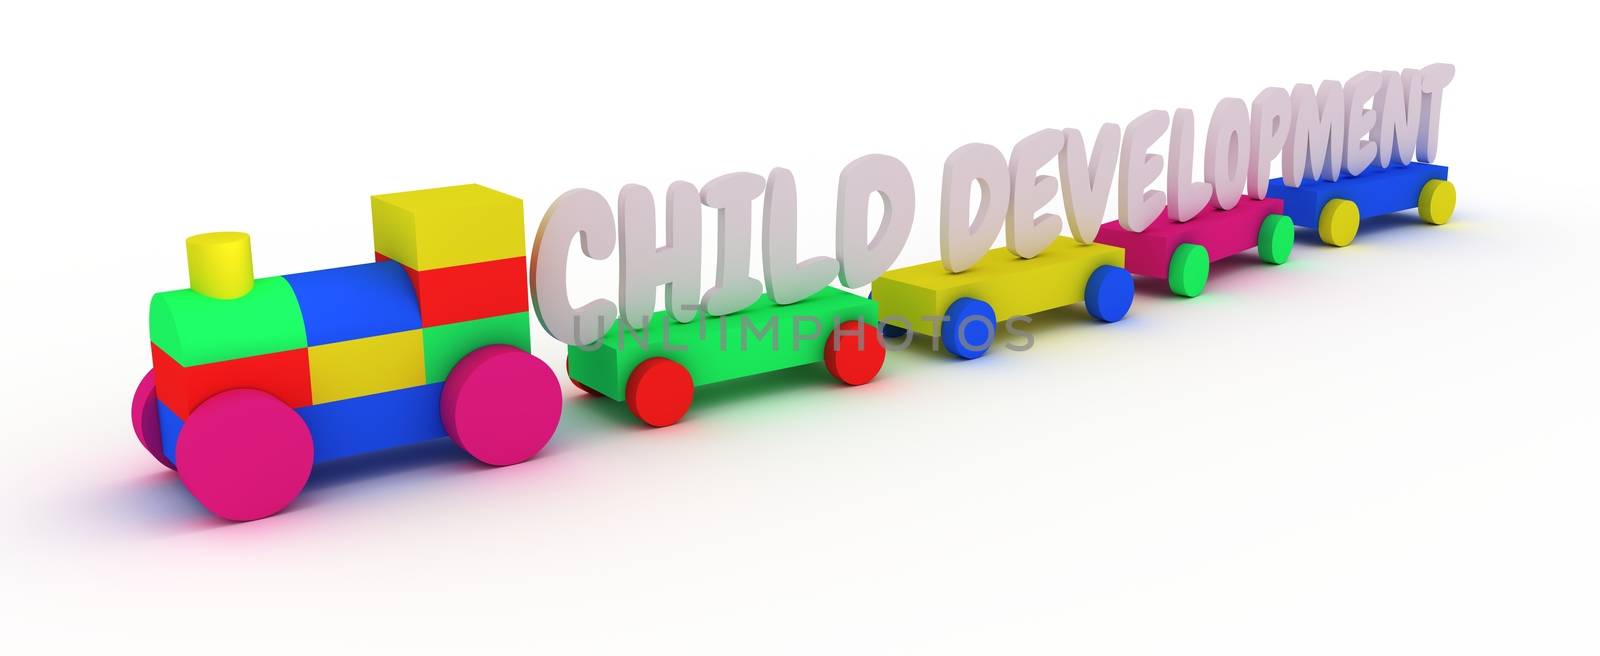 Child Development by darrenwhittingham